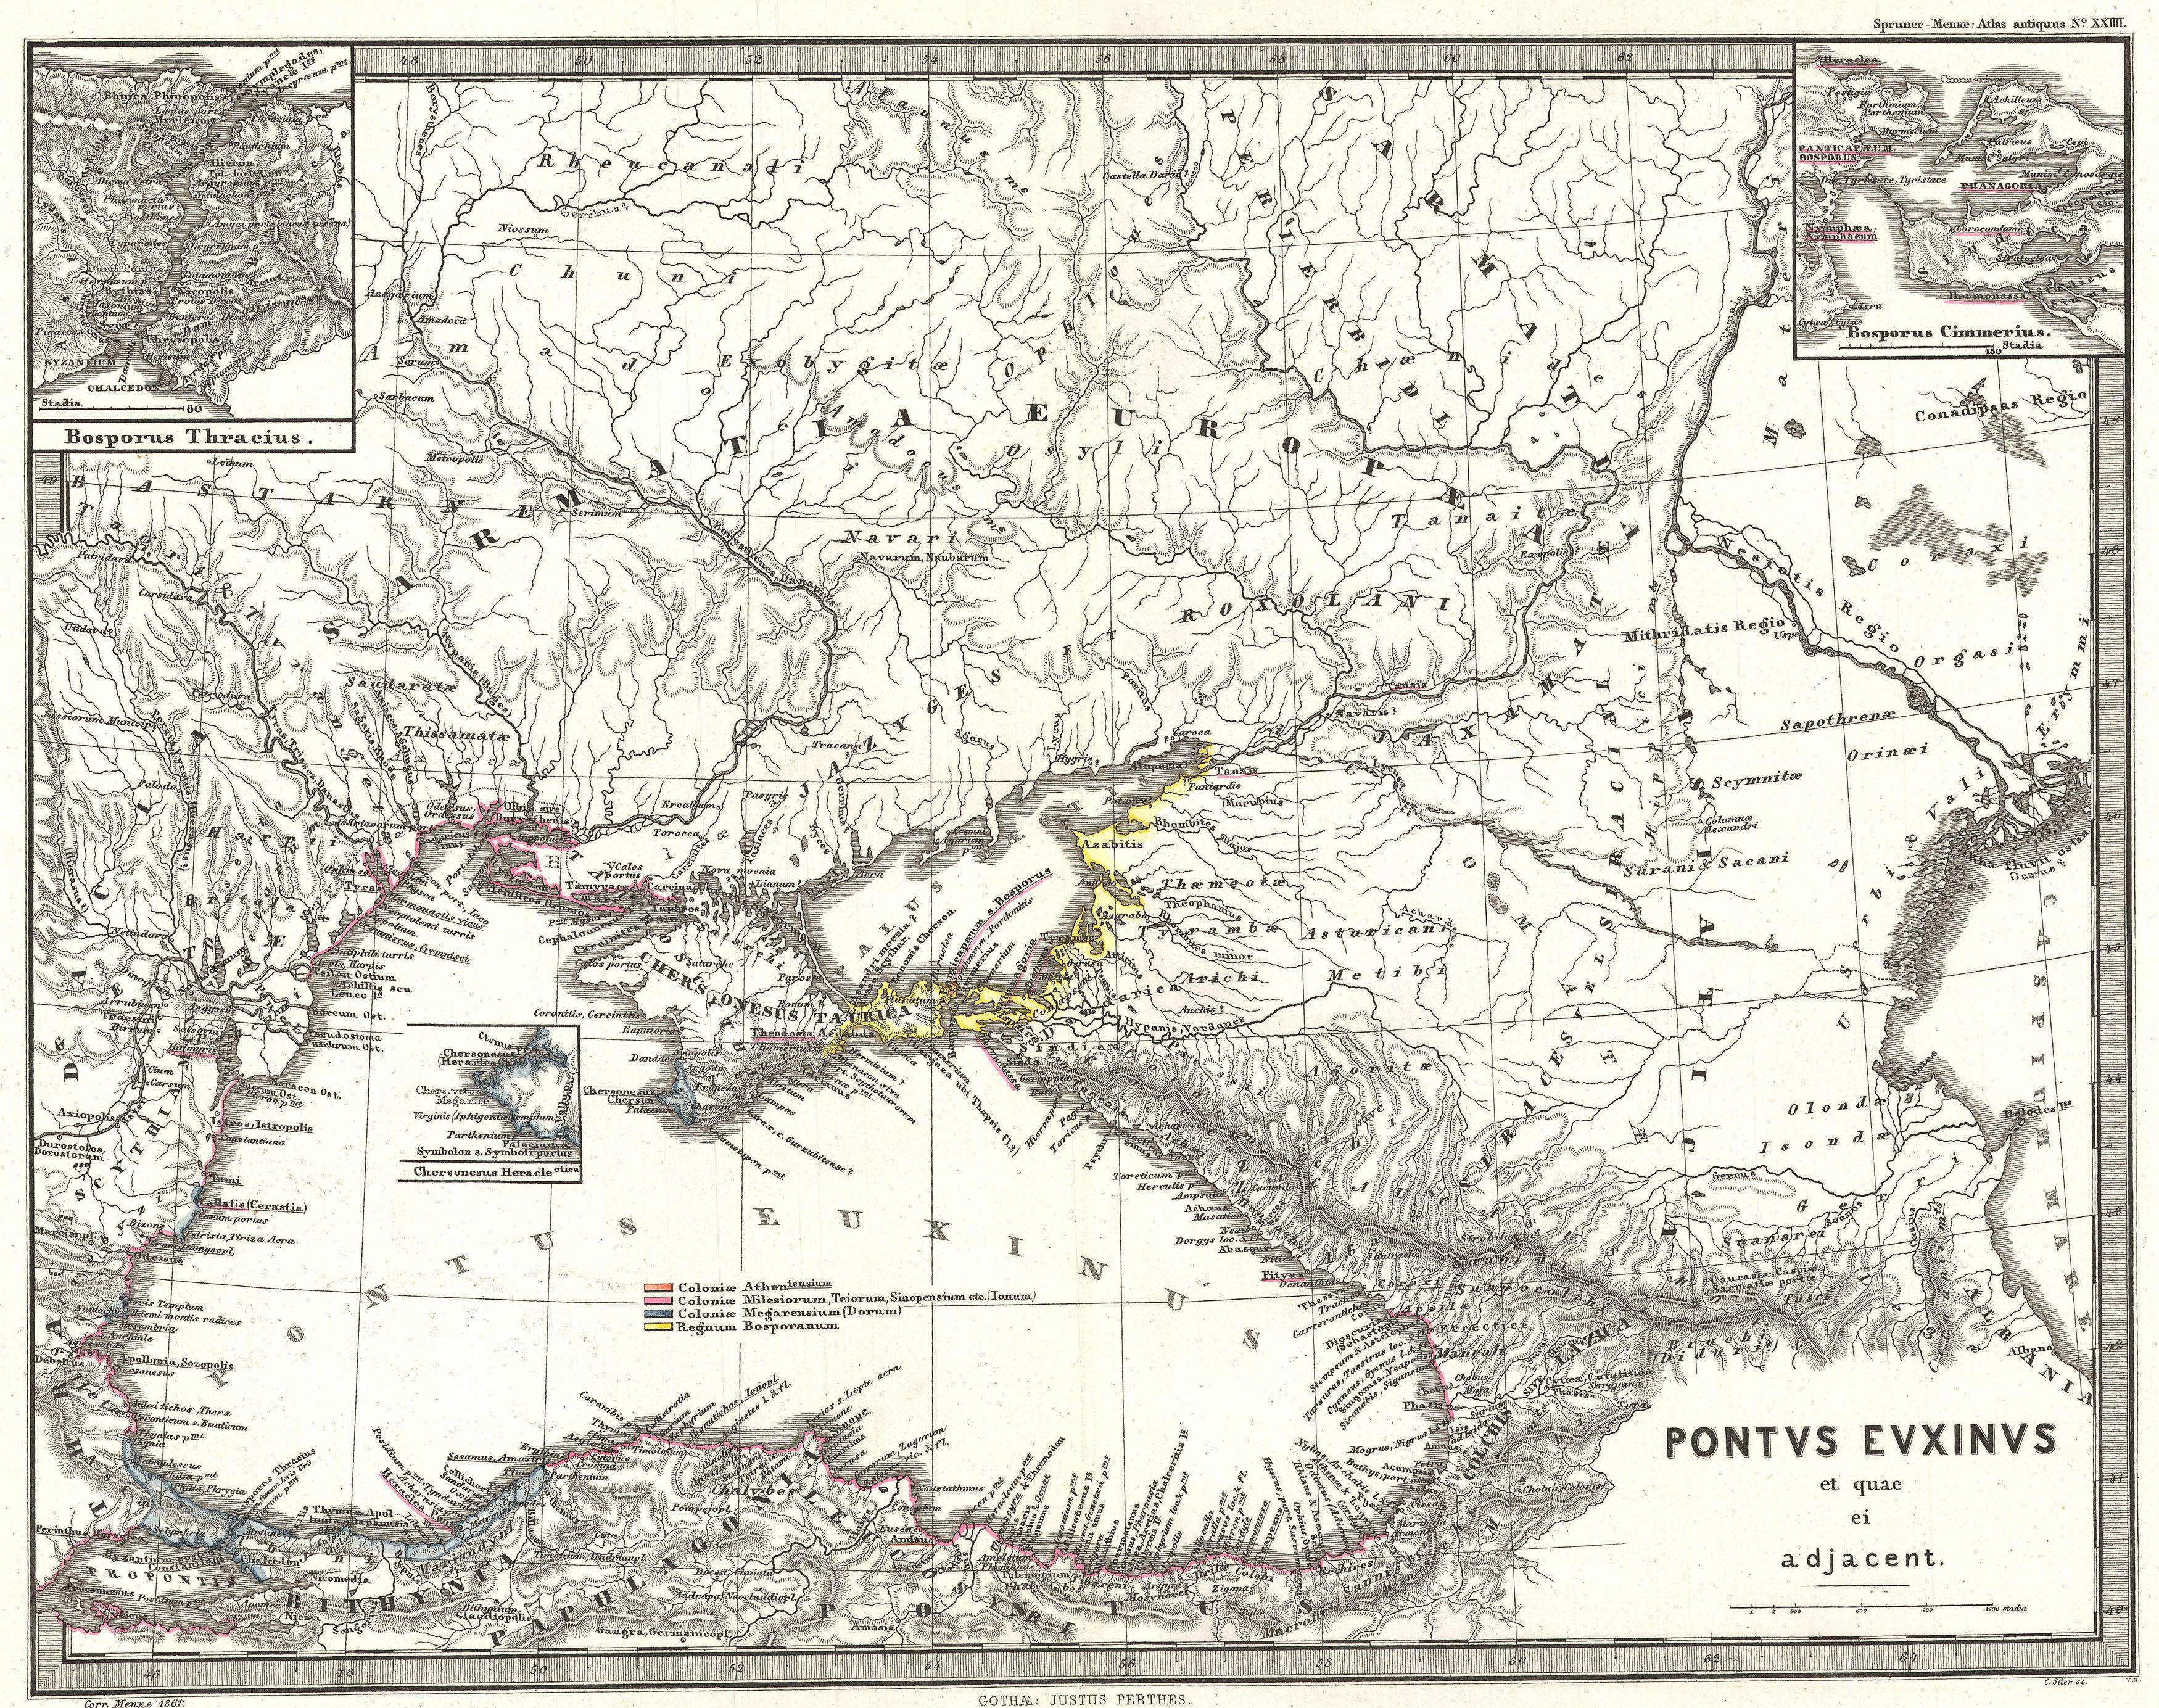 1865 Spruner Map of the Black Sea and Adjacent Regions - Geographicus - PontusEuxinus-spruner-1865